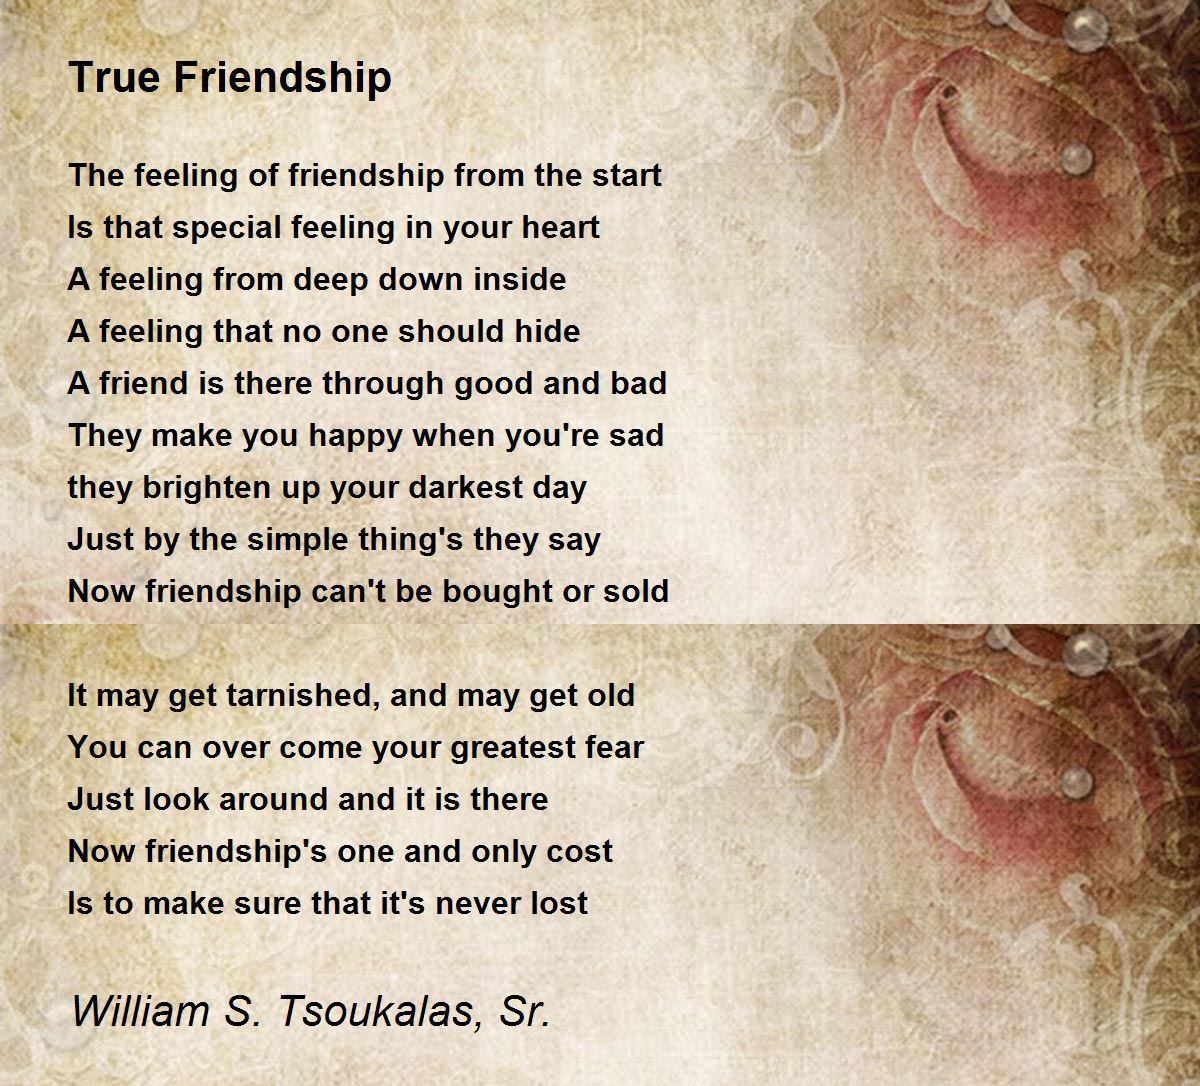 True Friendship Poem by William S. Tsoukalas, Sr. - Poem Hunter